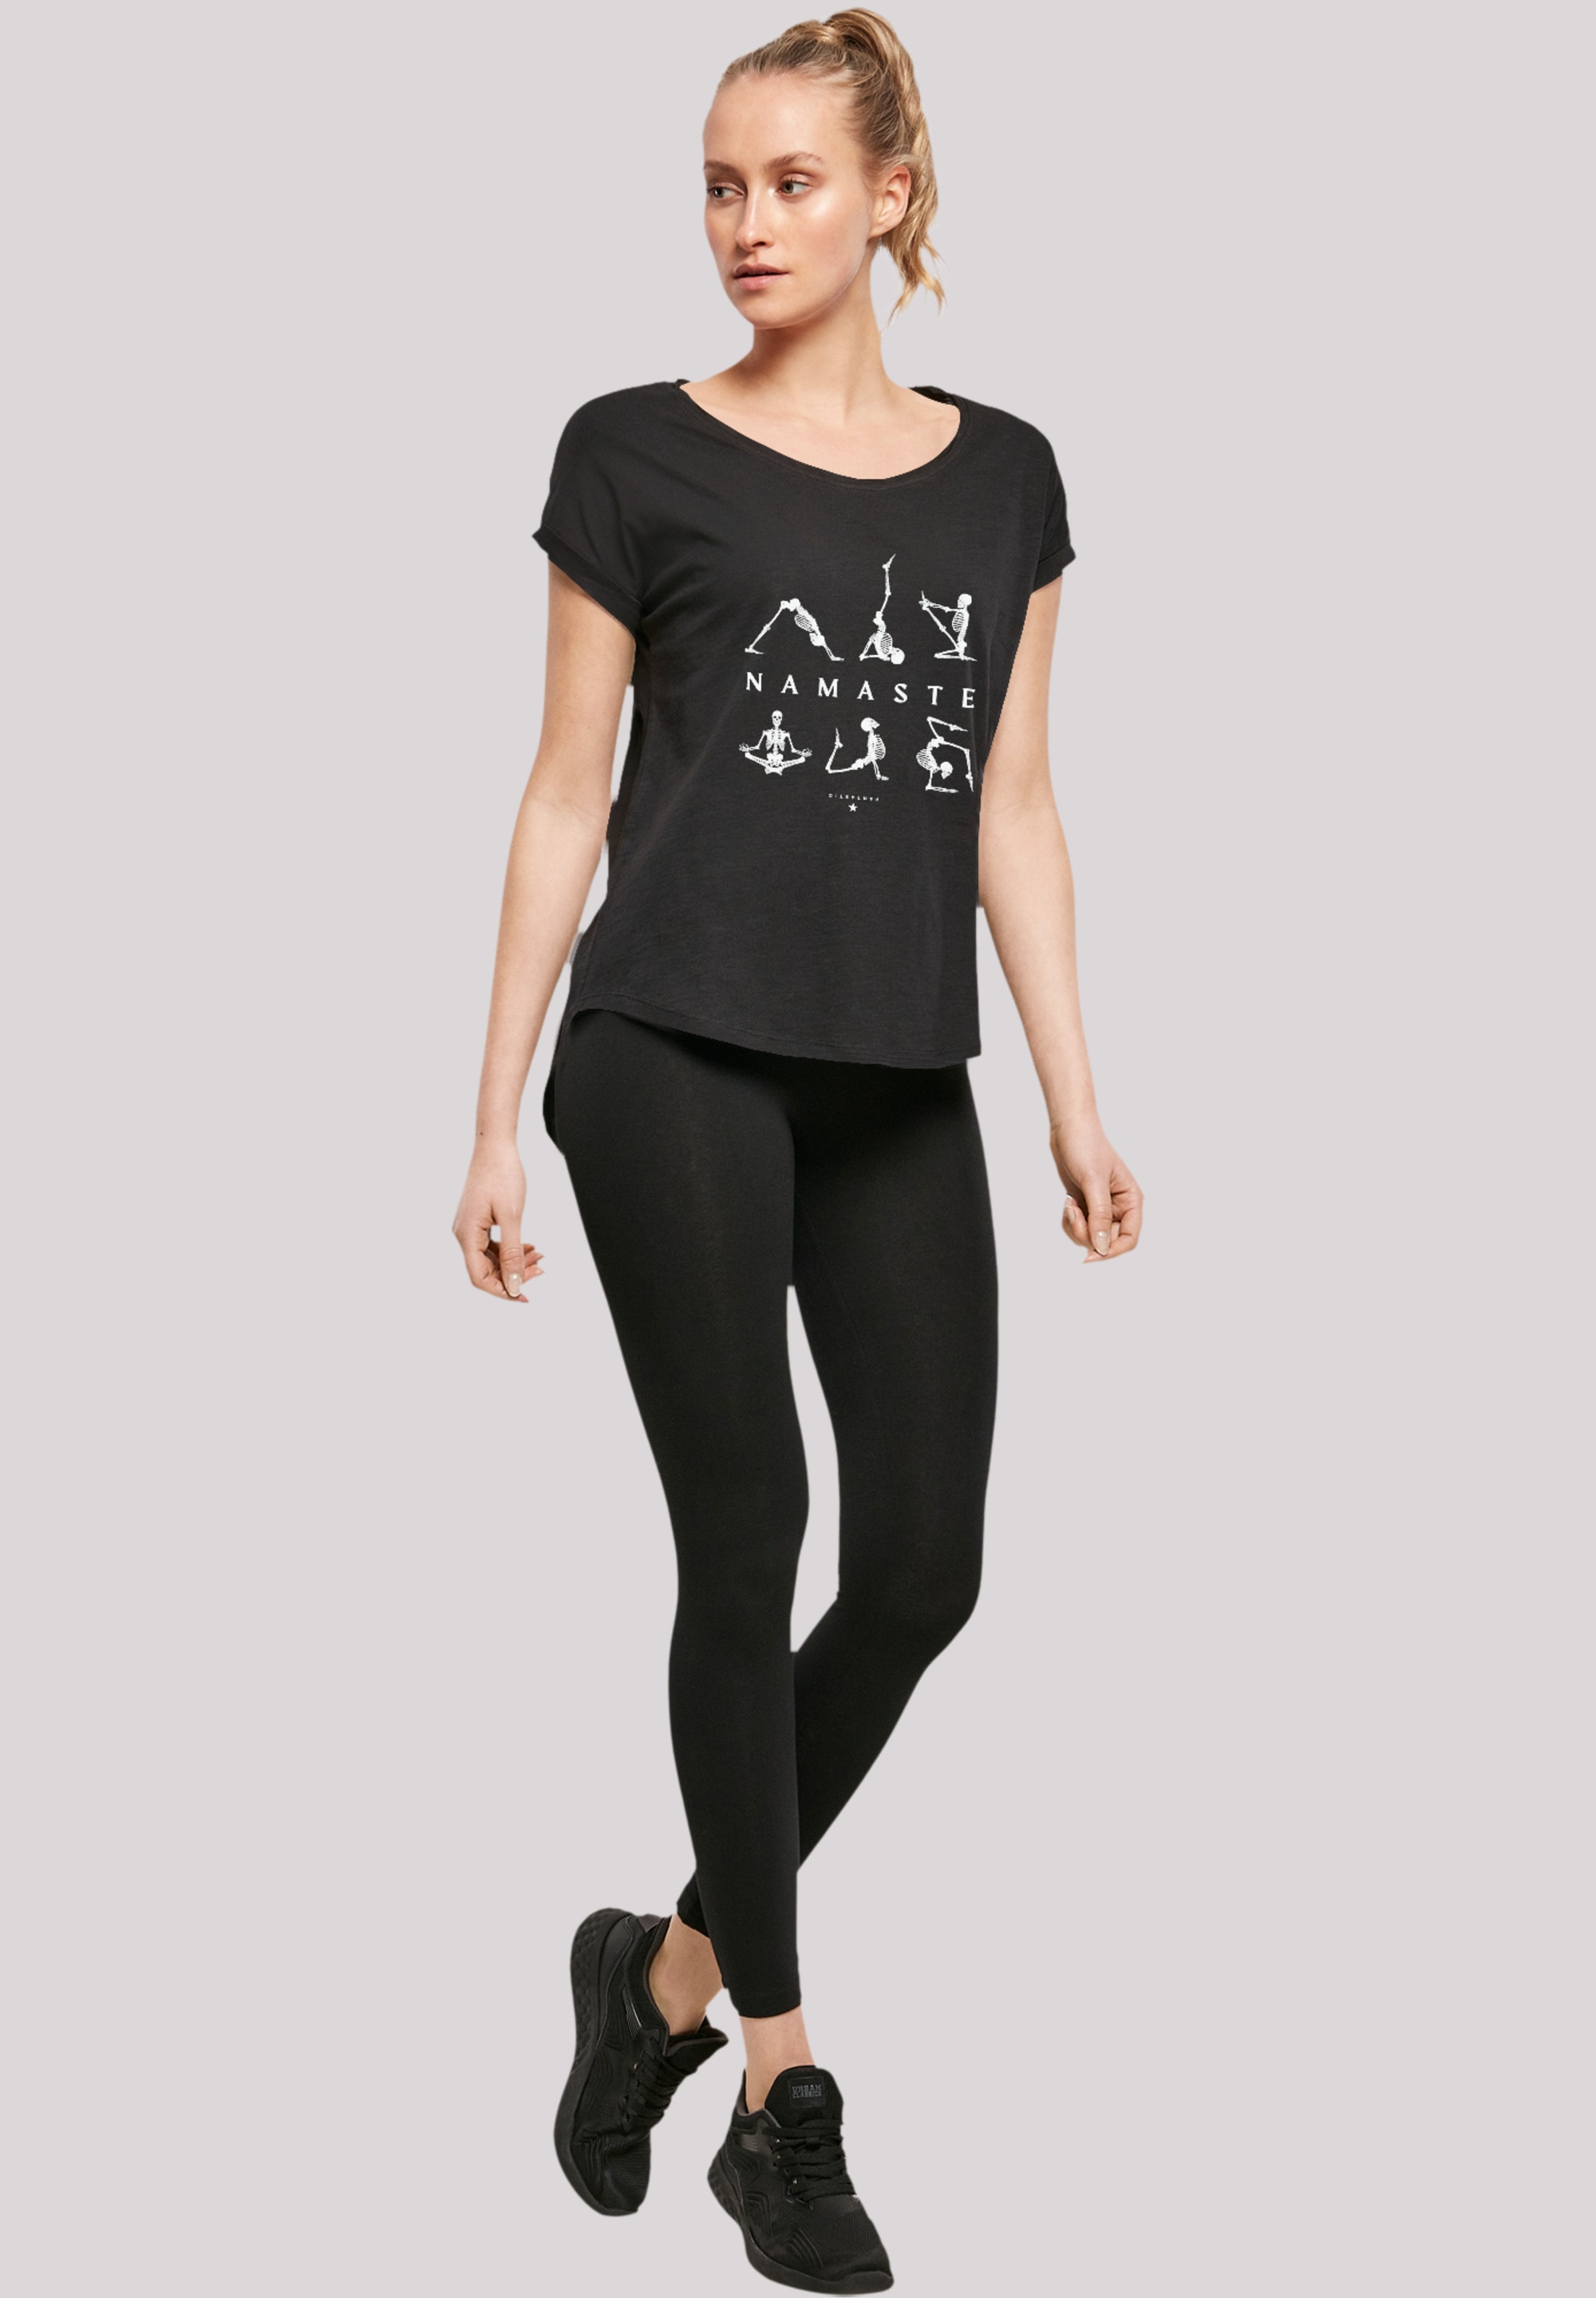 BAUR | Halloween«, Skelett F4NT4STIC Print »Namaste bestellen T-Shirt Yoga